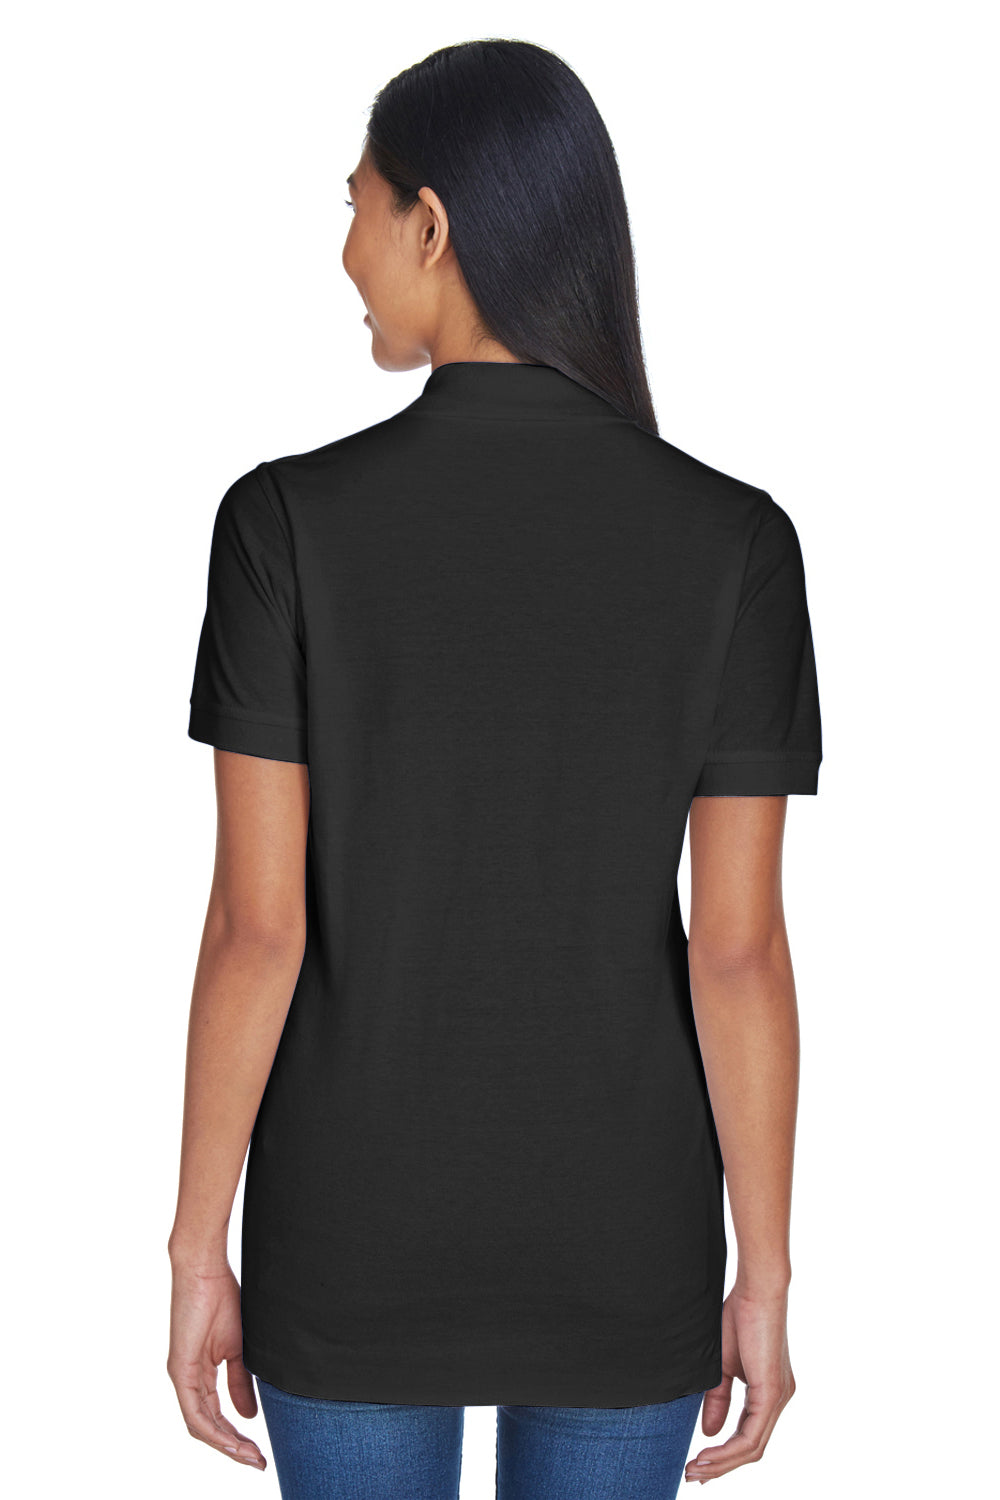 UltraClub 8530 Womens Classic Short Sleeve Polo Shirt Black Back